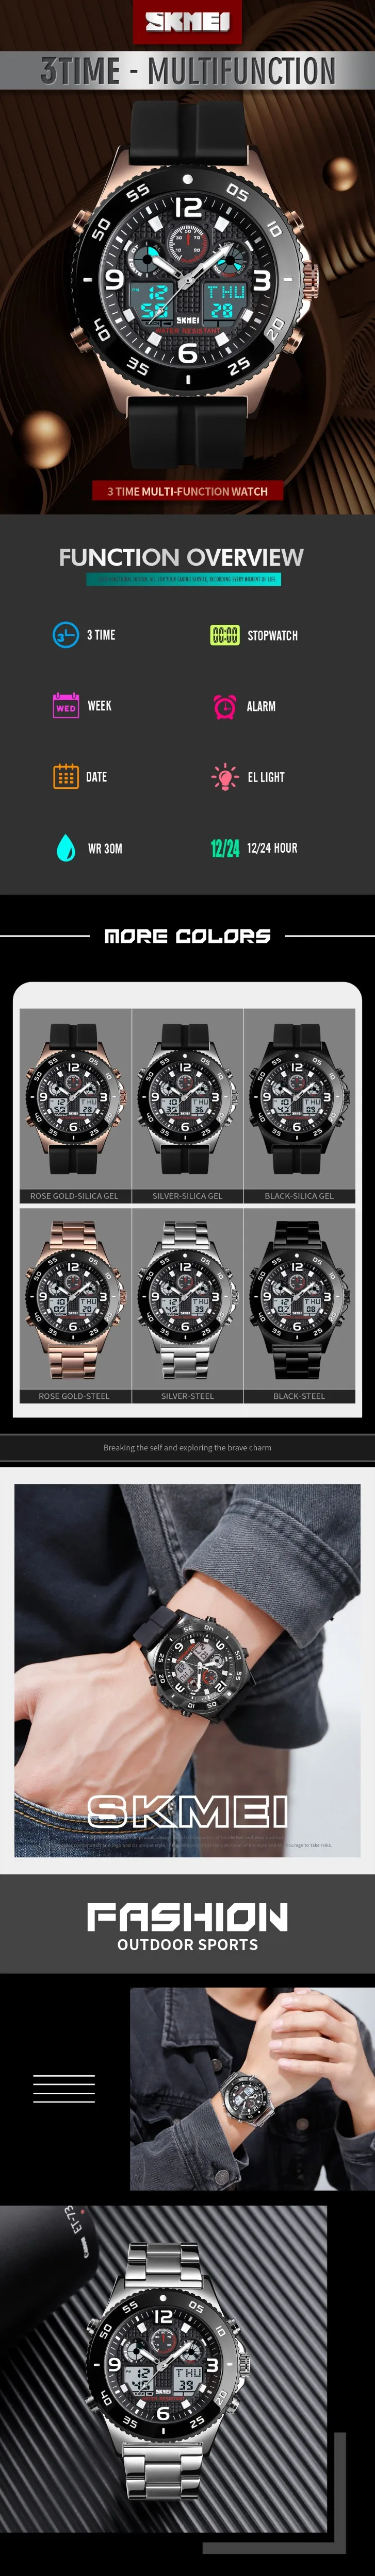 Men Digital Watch Luxury Brand SKMEI Stopwatch Chronograph Sport Wristwatch Fashion Men's Stainless Steel Bracelet Alarm Clock